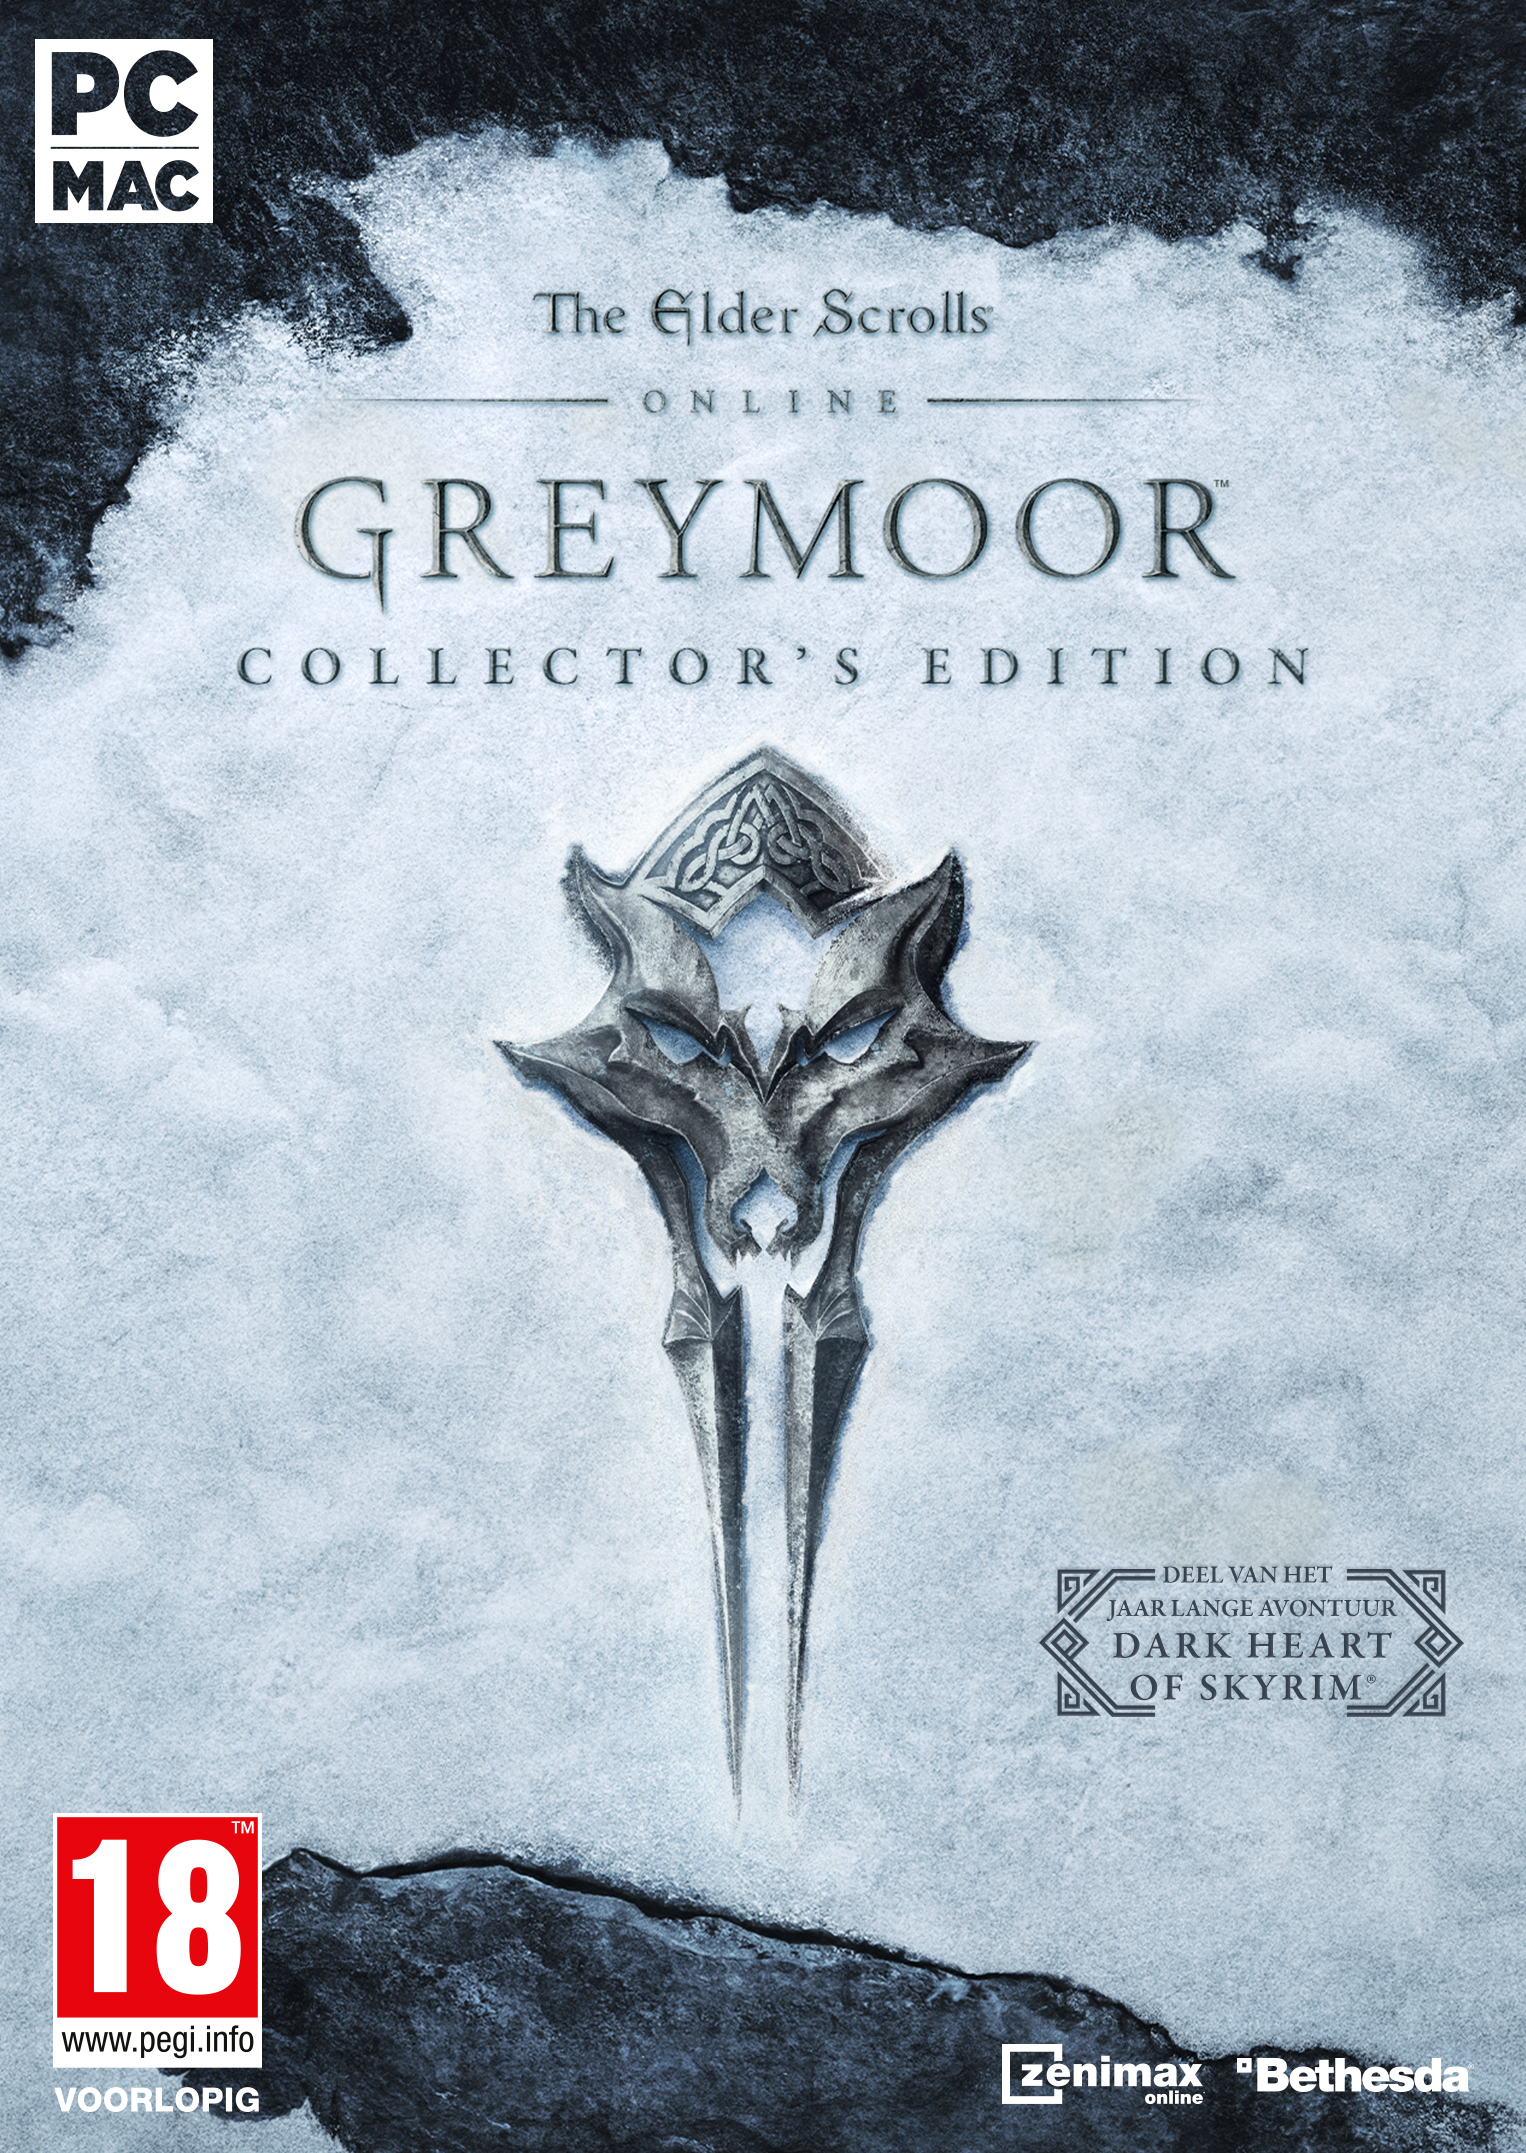 The Elder Scrolls Online: Greymoor - Collector's Edition - PC Game